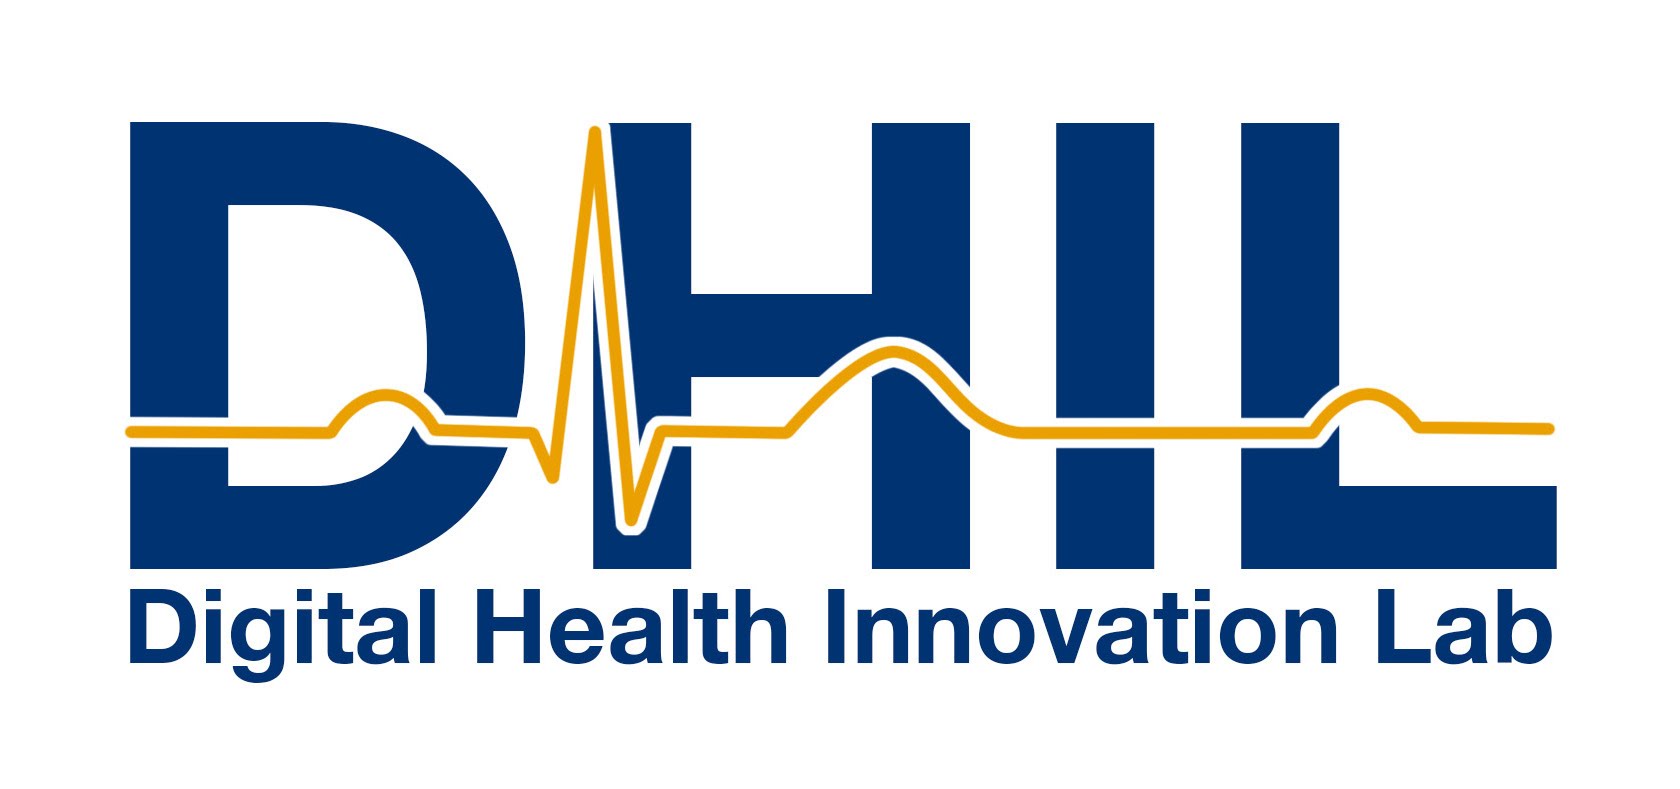 New Digital Health Innovation Lab website